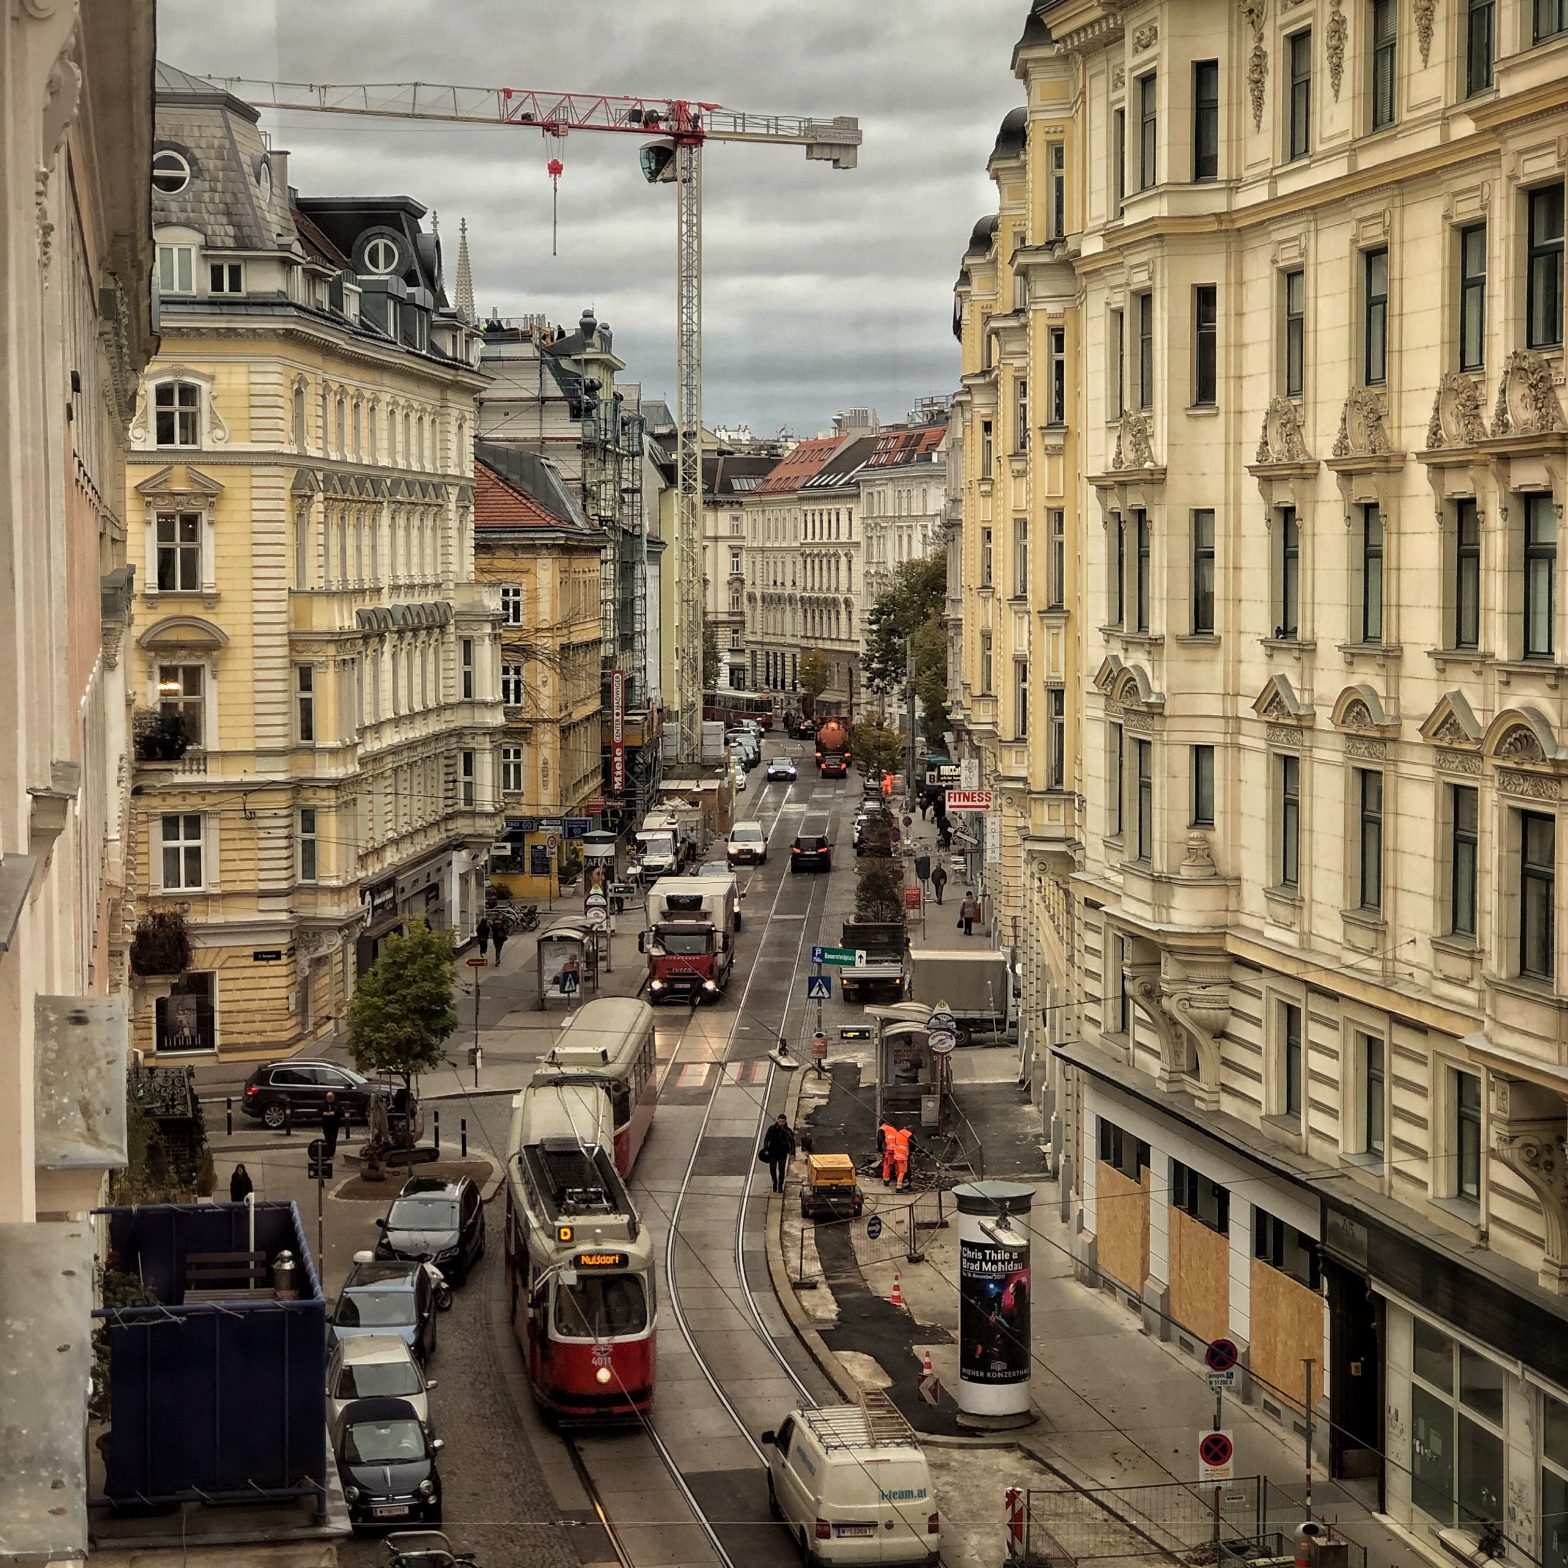 From my window, Vienna